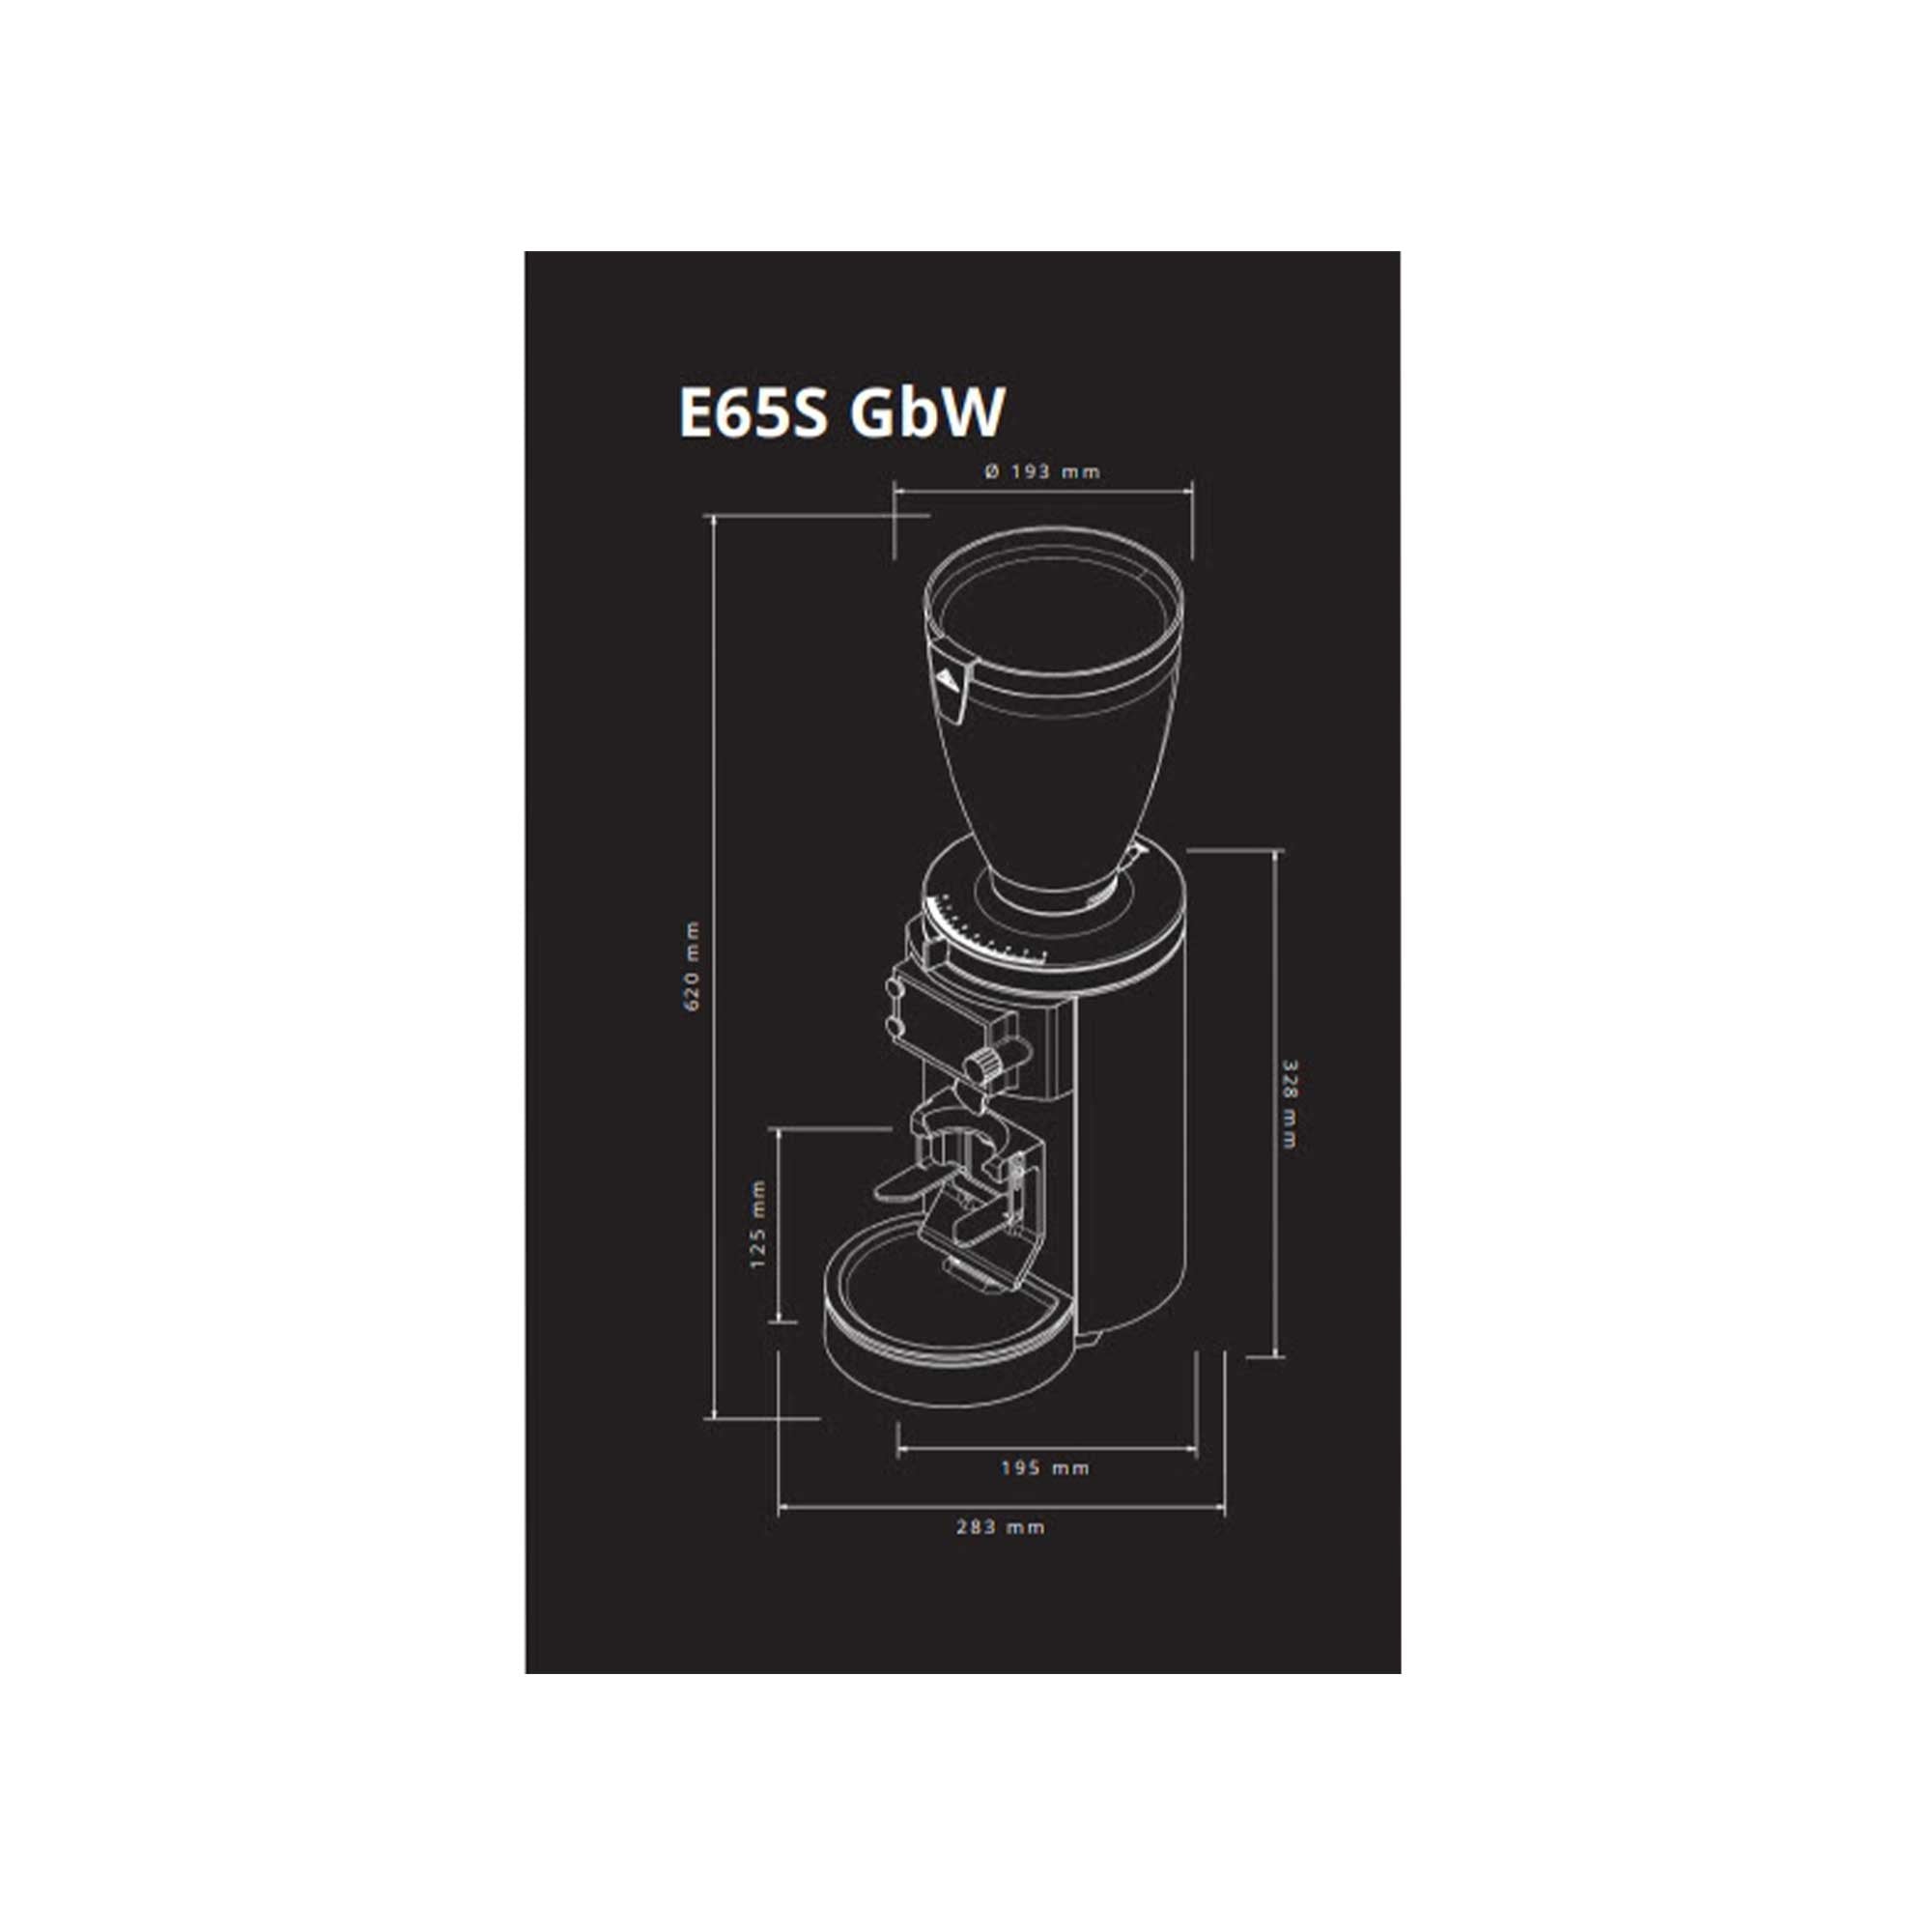 Mahlkönig E65S GbW (Grind by Weight) Espresso Shop Grinder